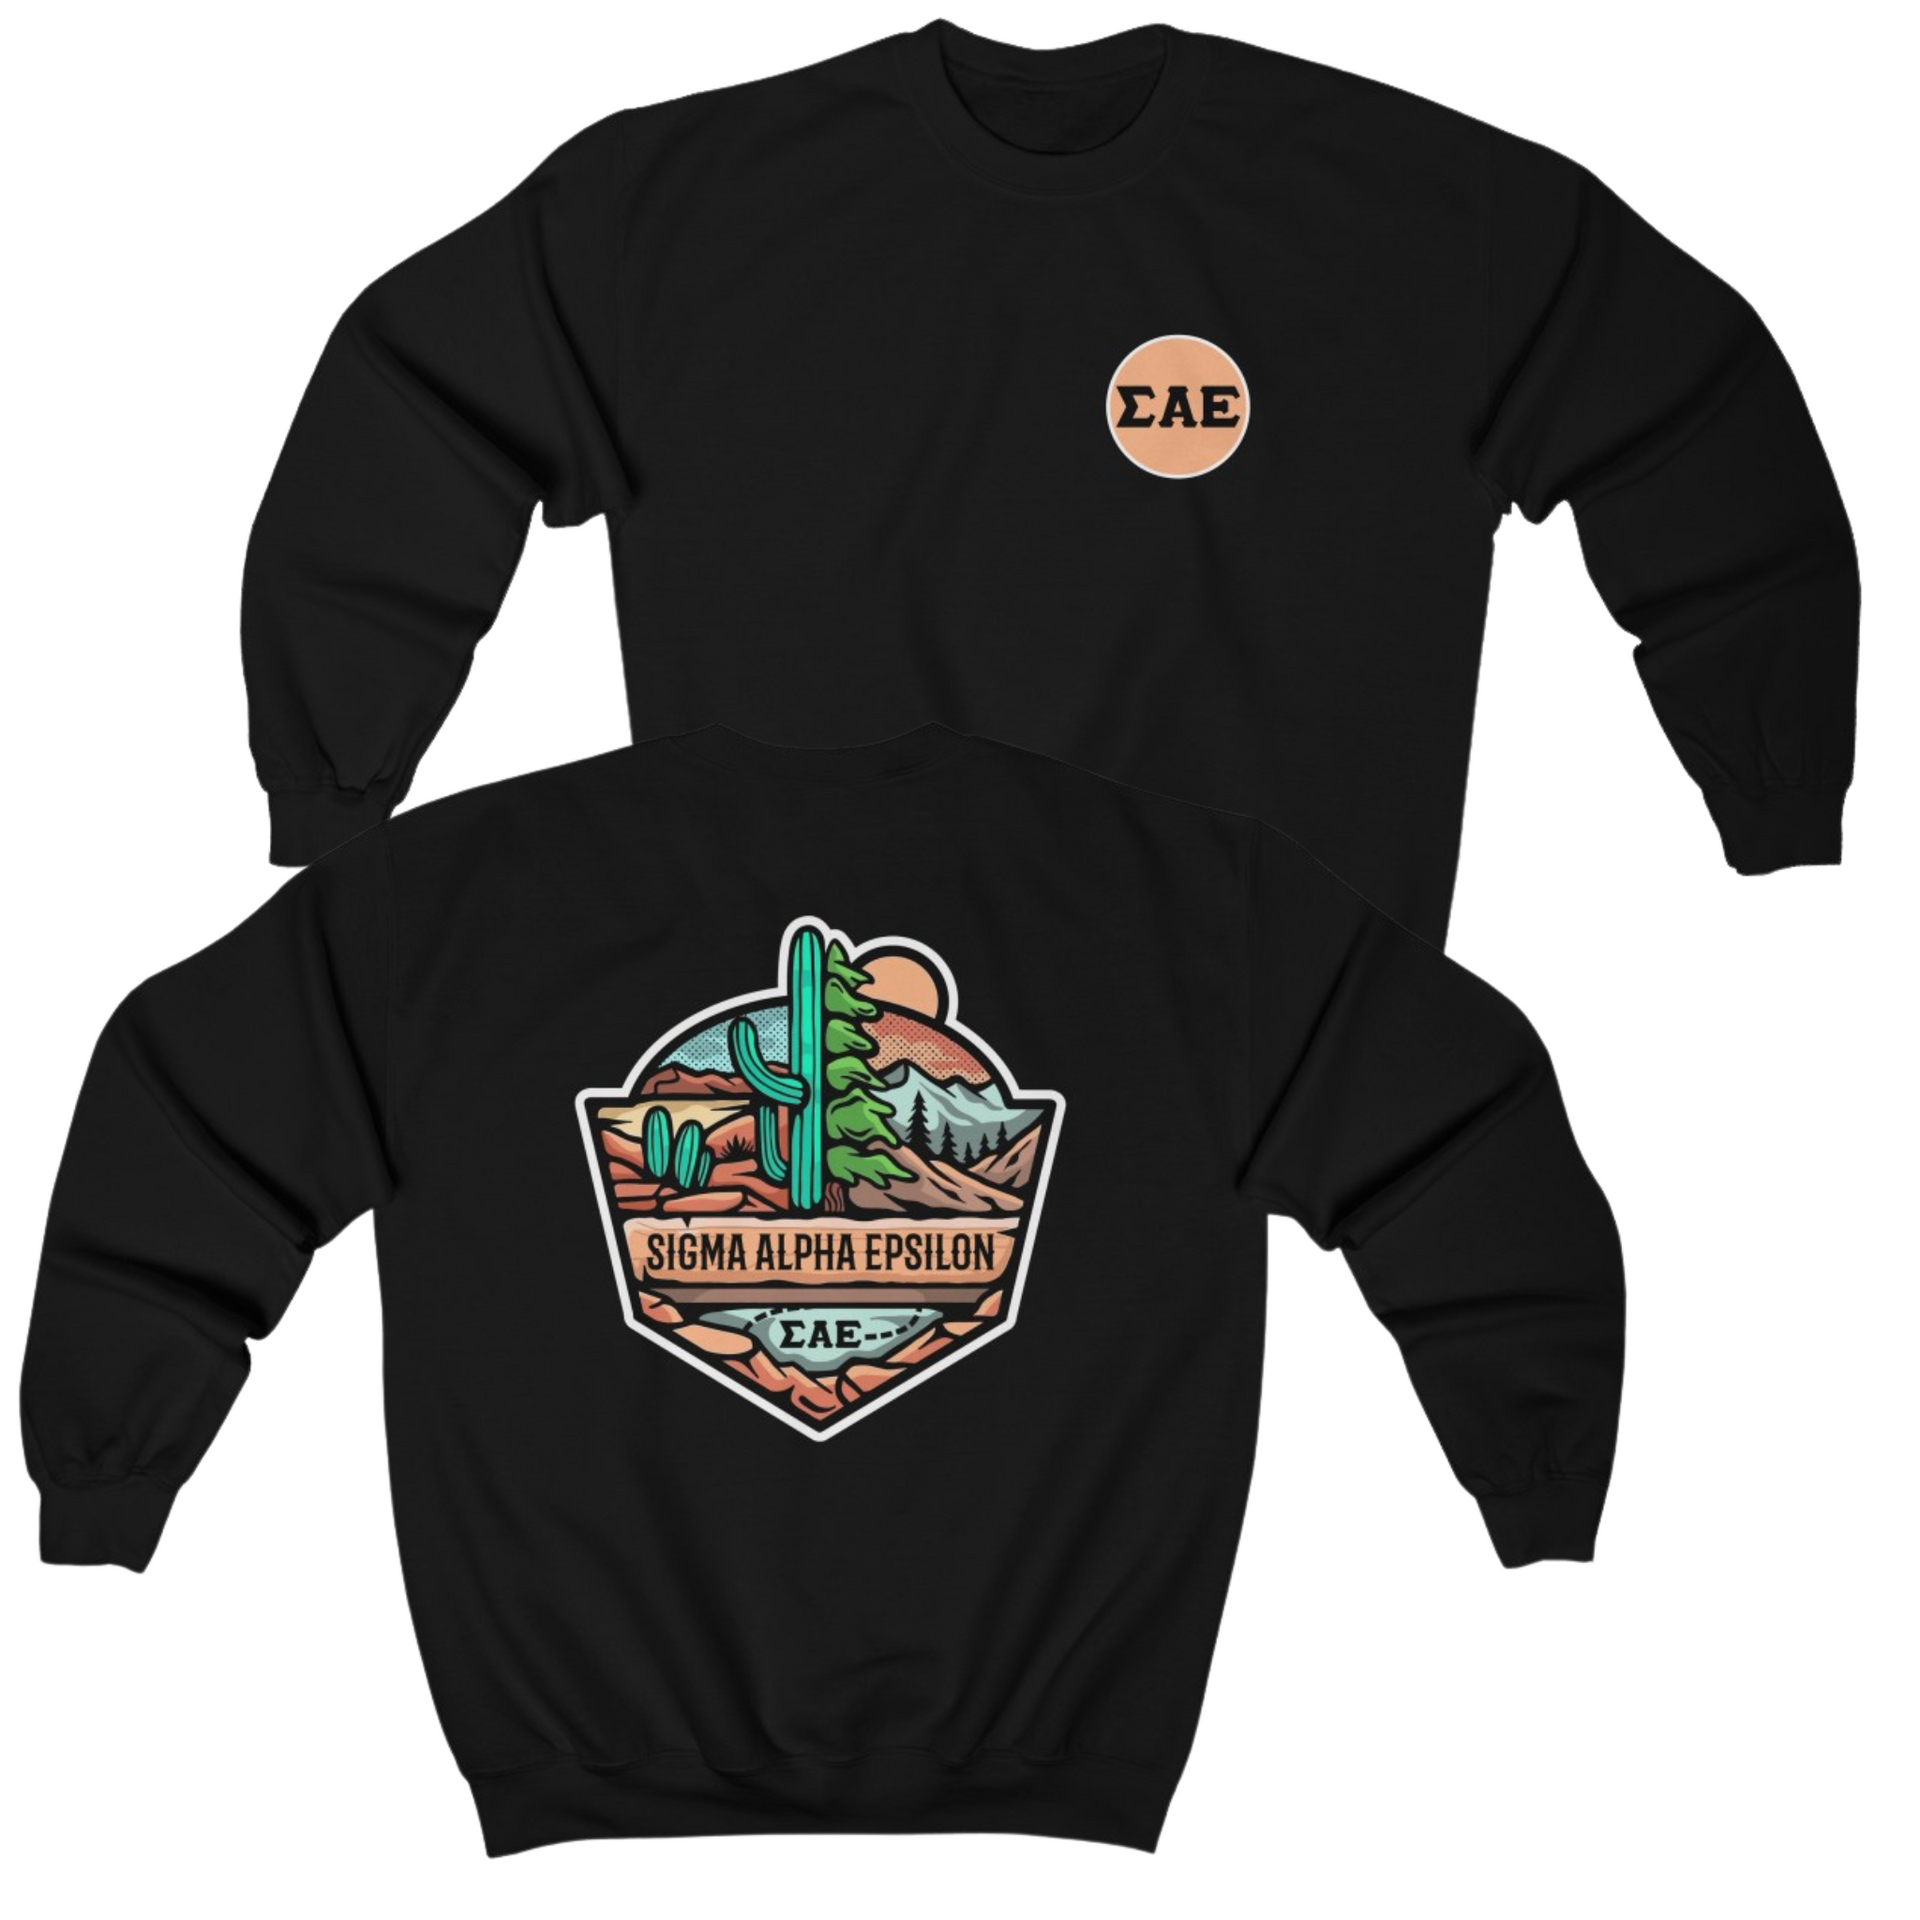 Black Sigma Alpha Epsilon Graphic Crewneck Sweatshirt | Desert Mountains | Sigma Alpha Epsilon Clothing and Merchandise 